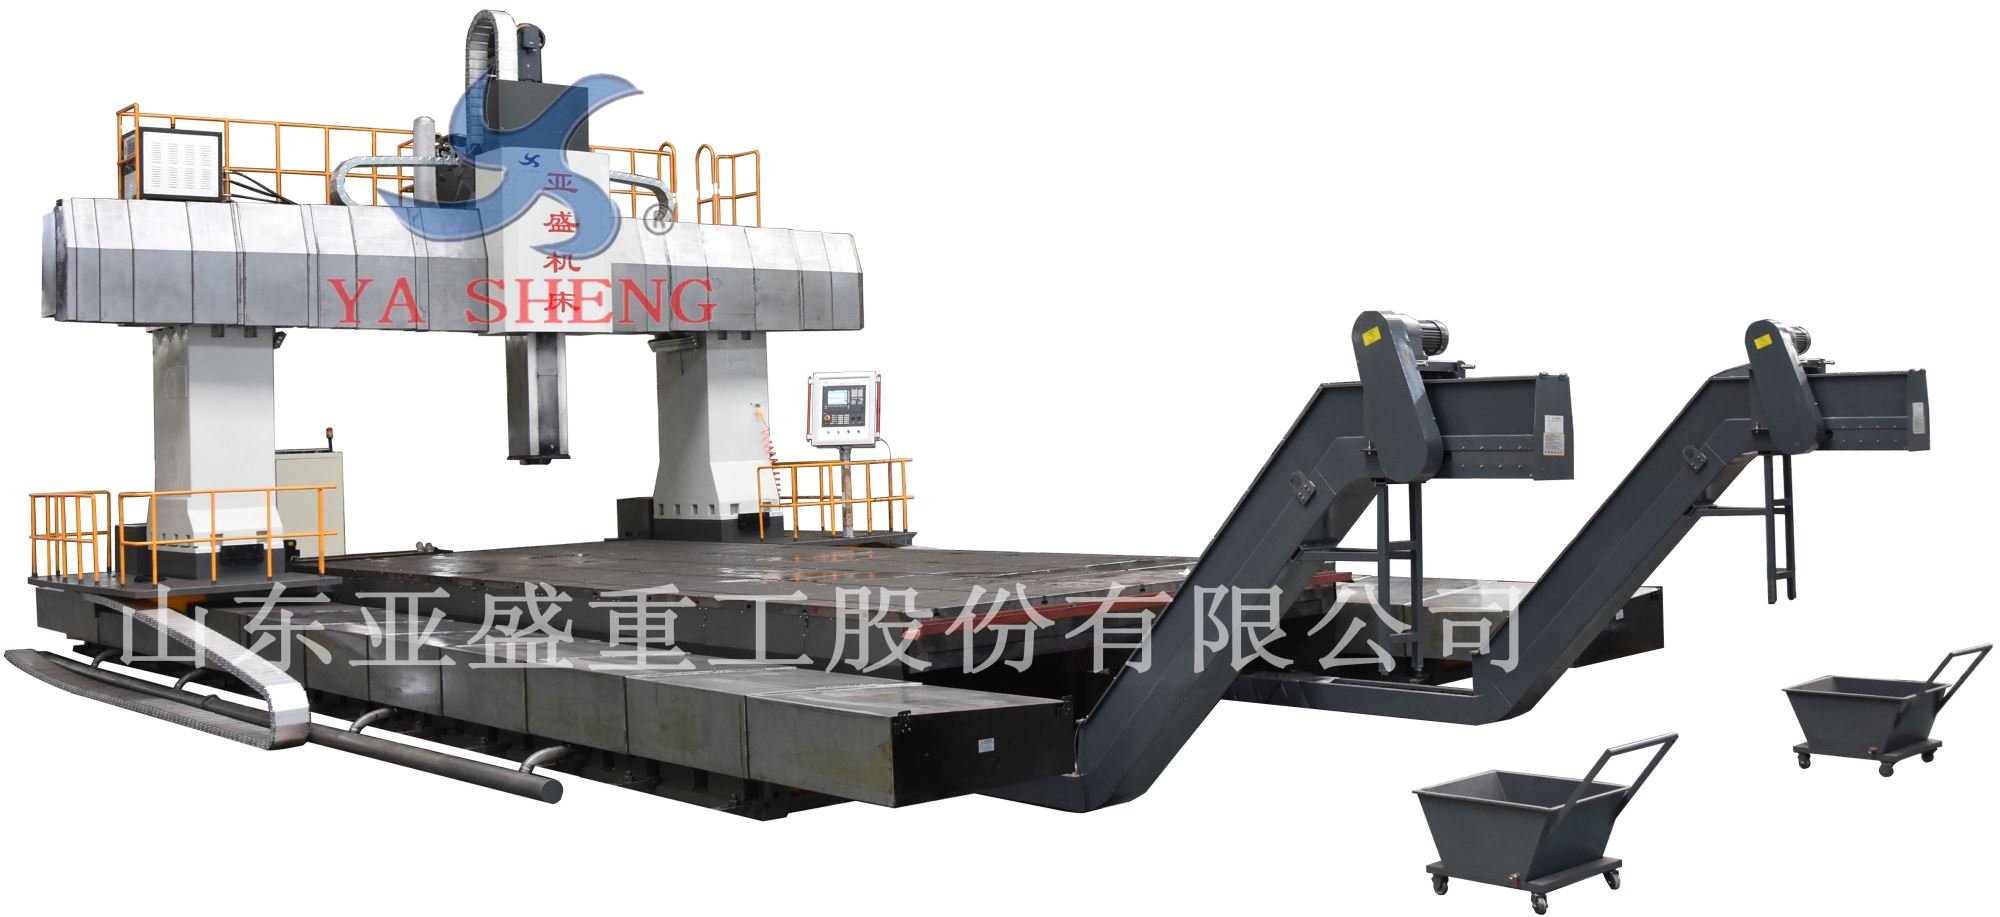 XK (H) 27 series of CNC fixed beam moving column gantry milling machine, machining center